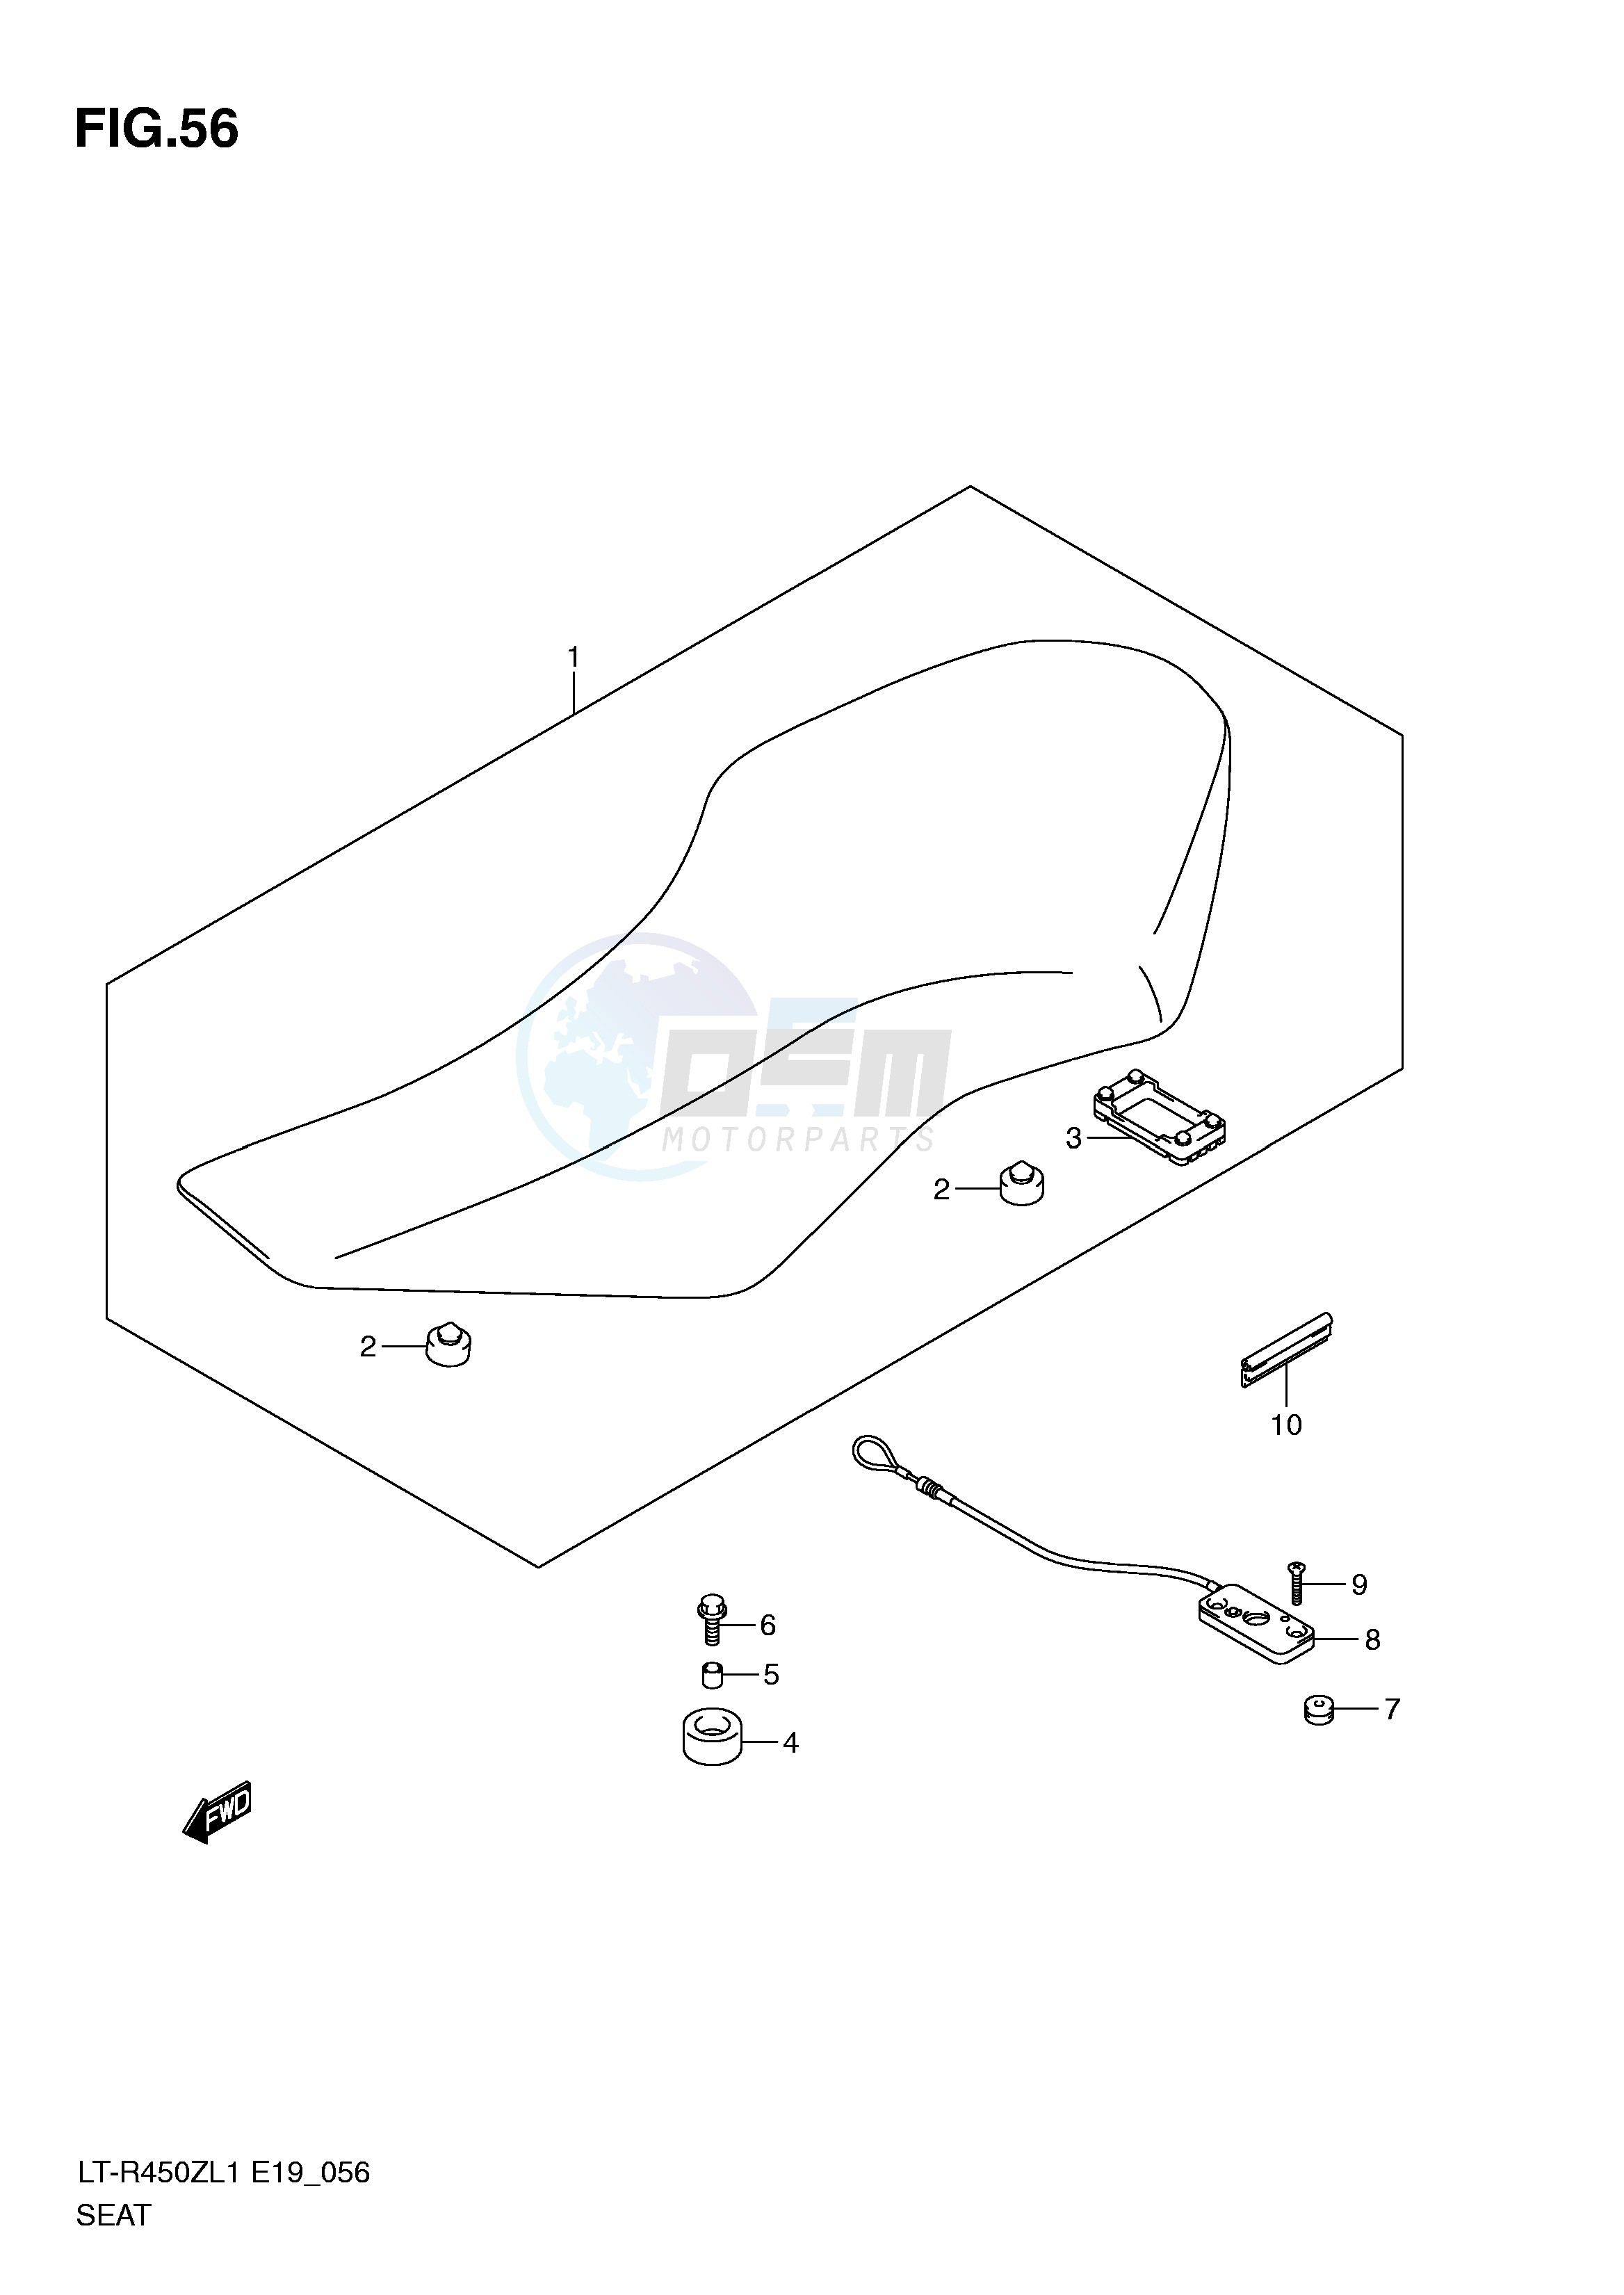 SEAT (LT-R450L1 E19) blueprint